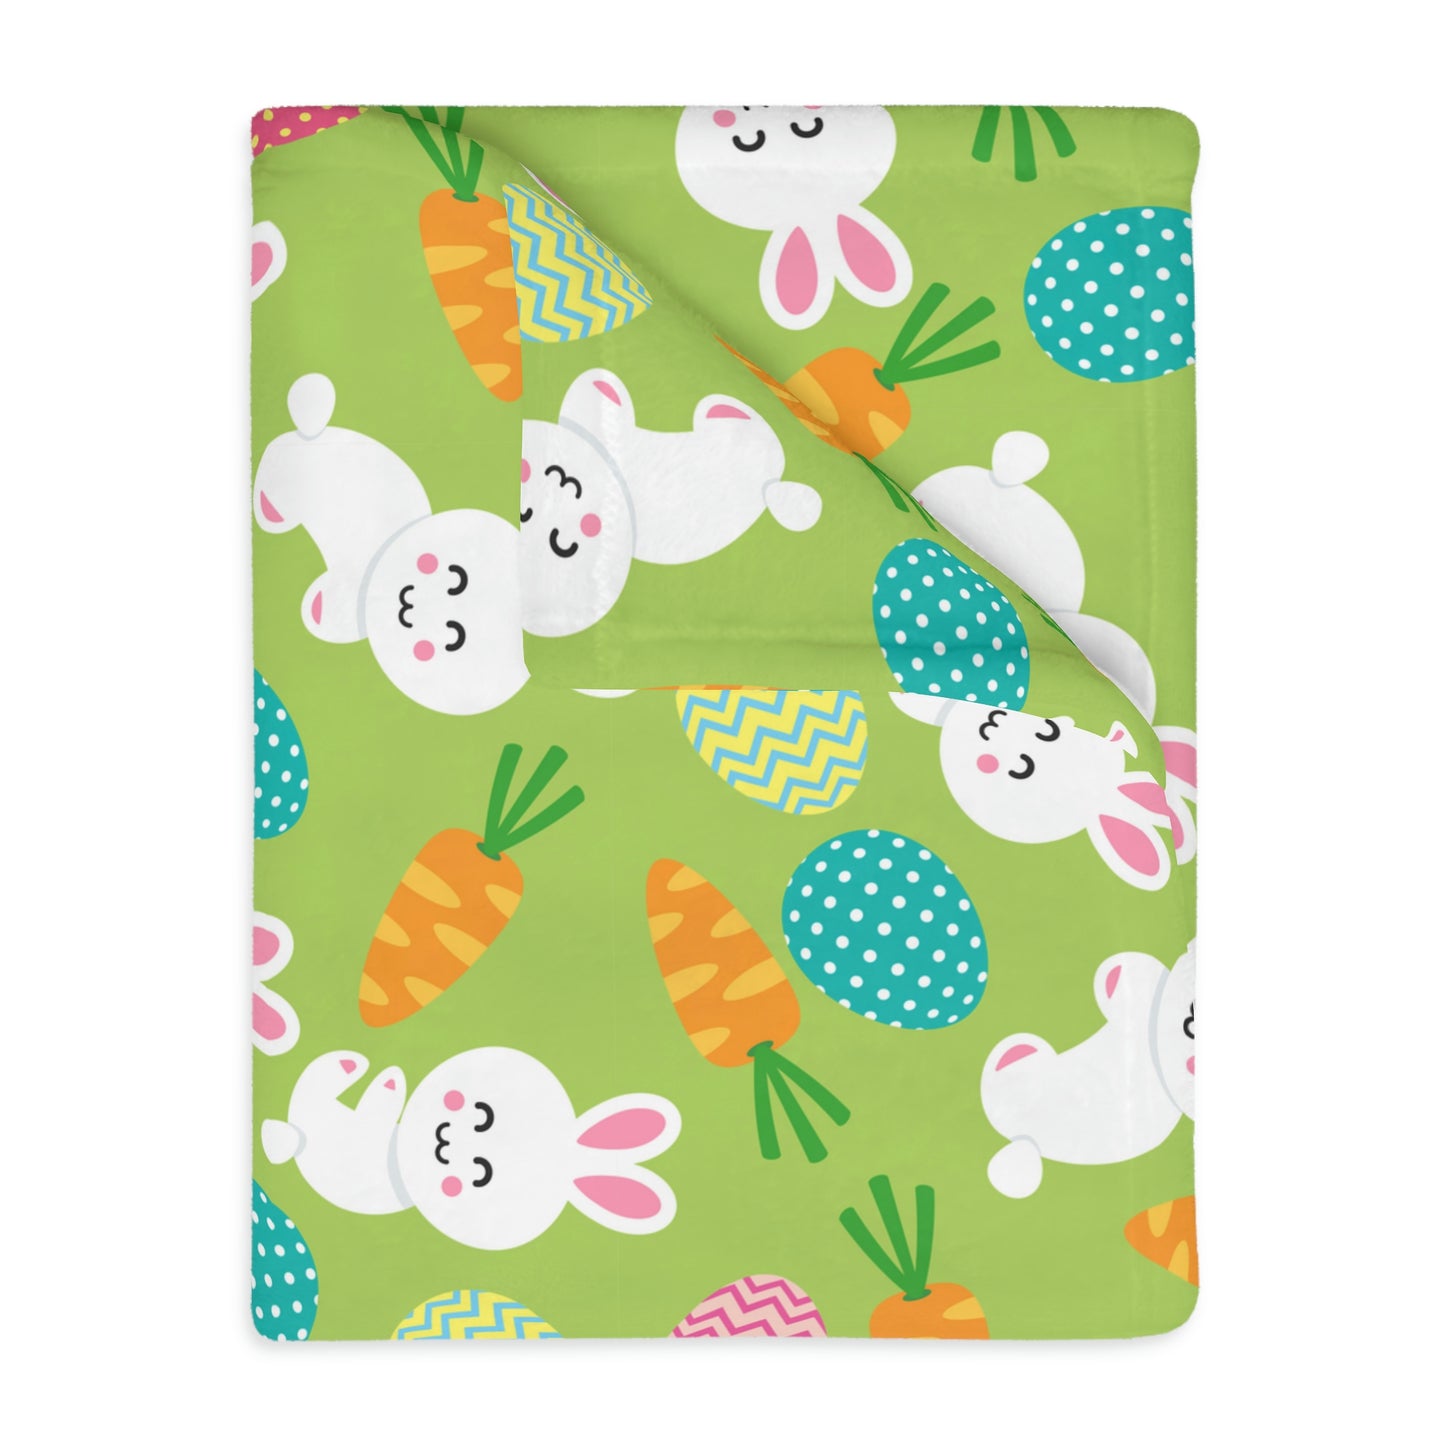 Bunnies and Eggs Velveteen Minky Blanket (Two-sided print)